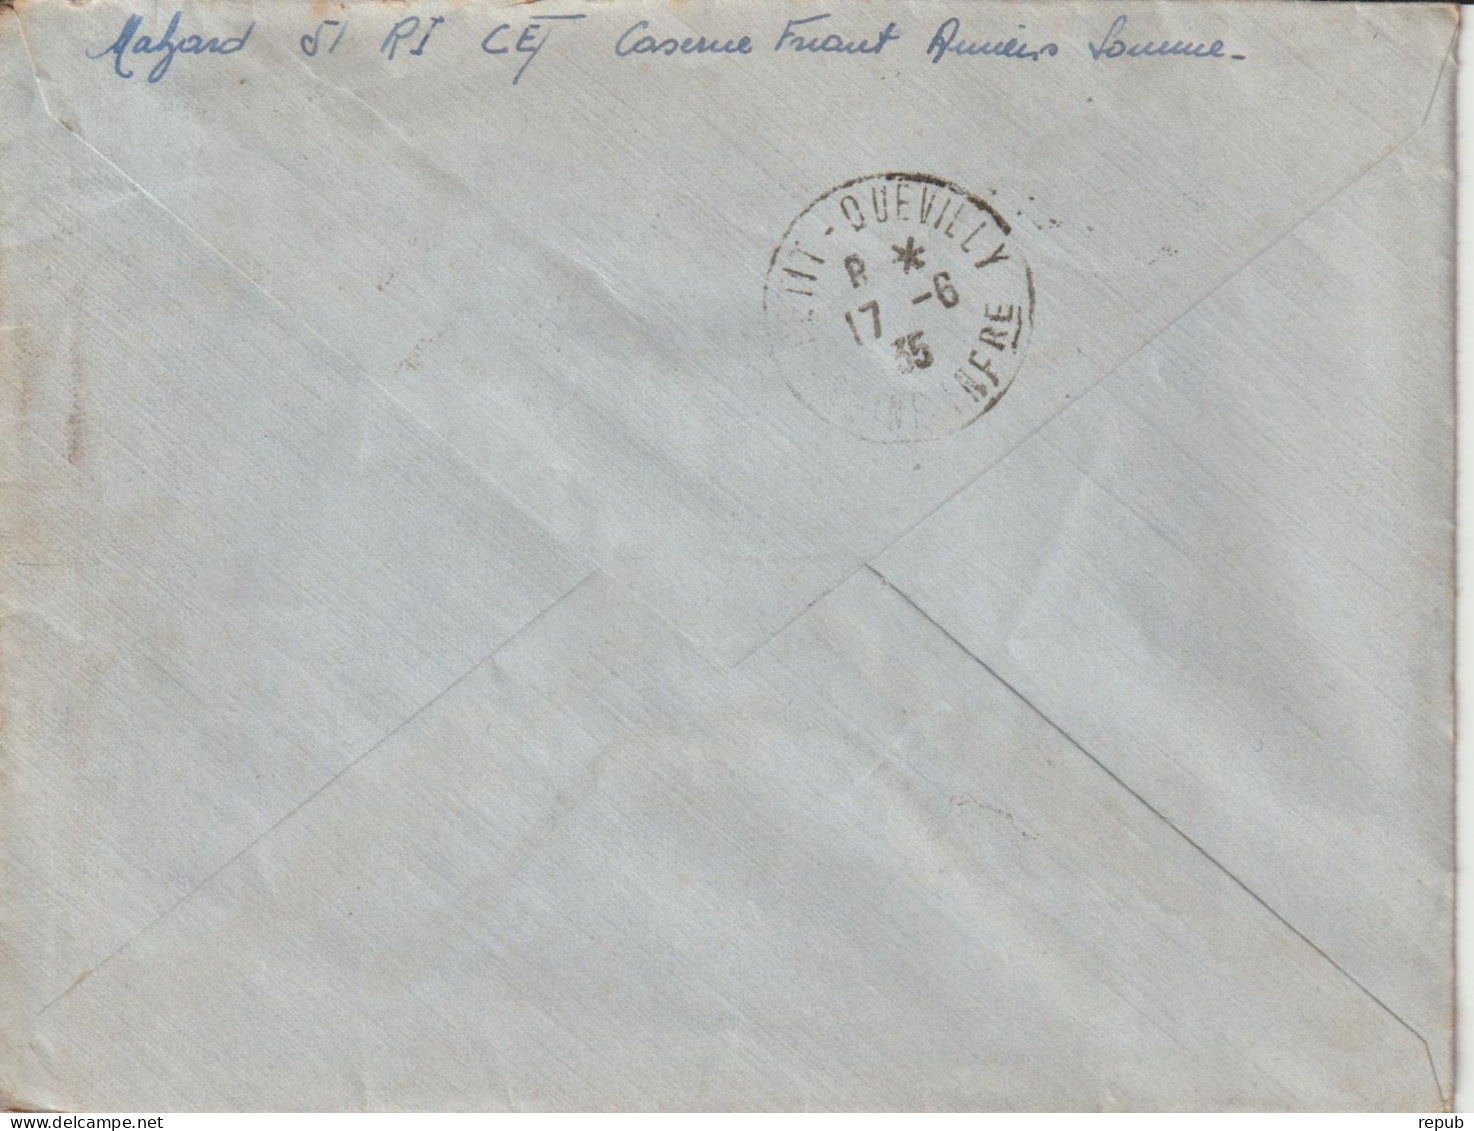 Lettre En Franchise FM 7 Oblitération 1935 Amiens - Military Postage Stamps